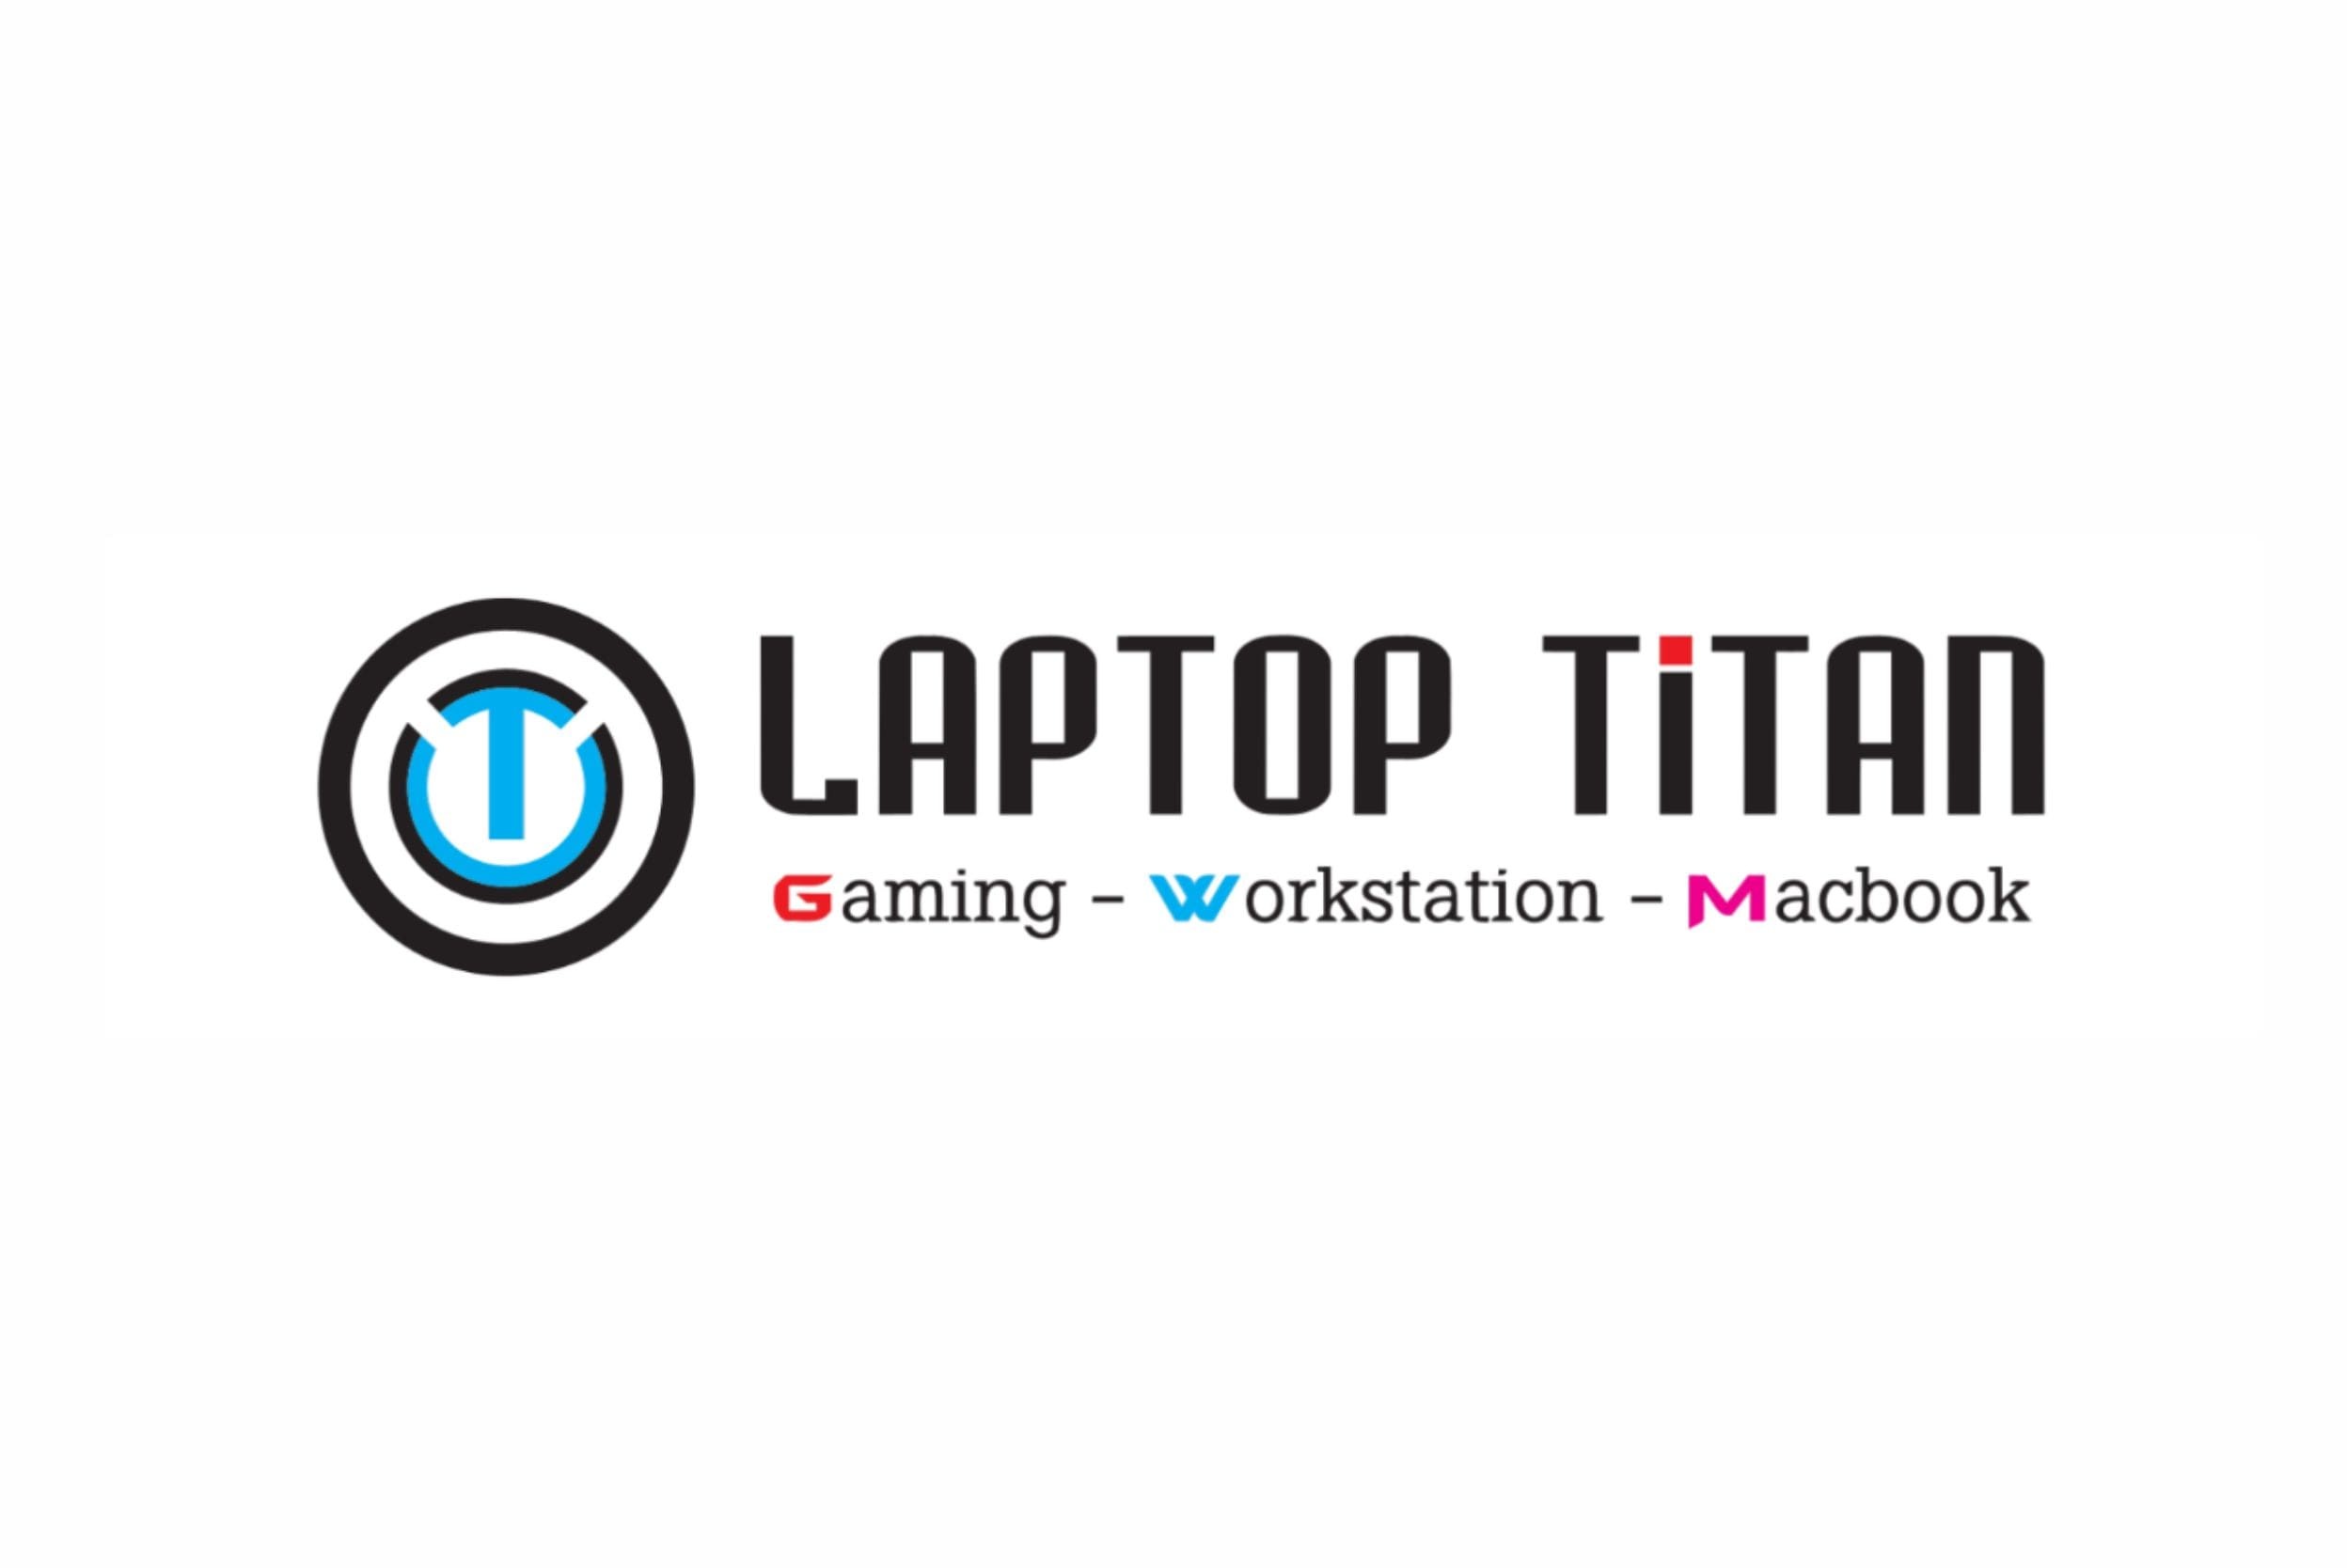 laptop-titan-logo 